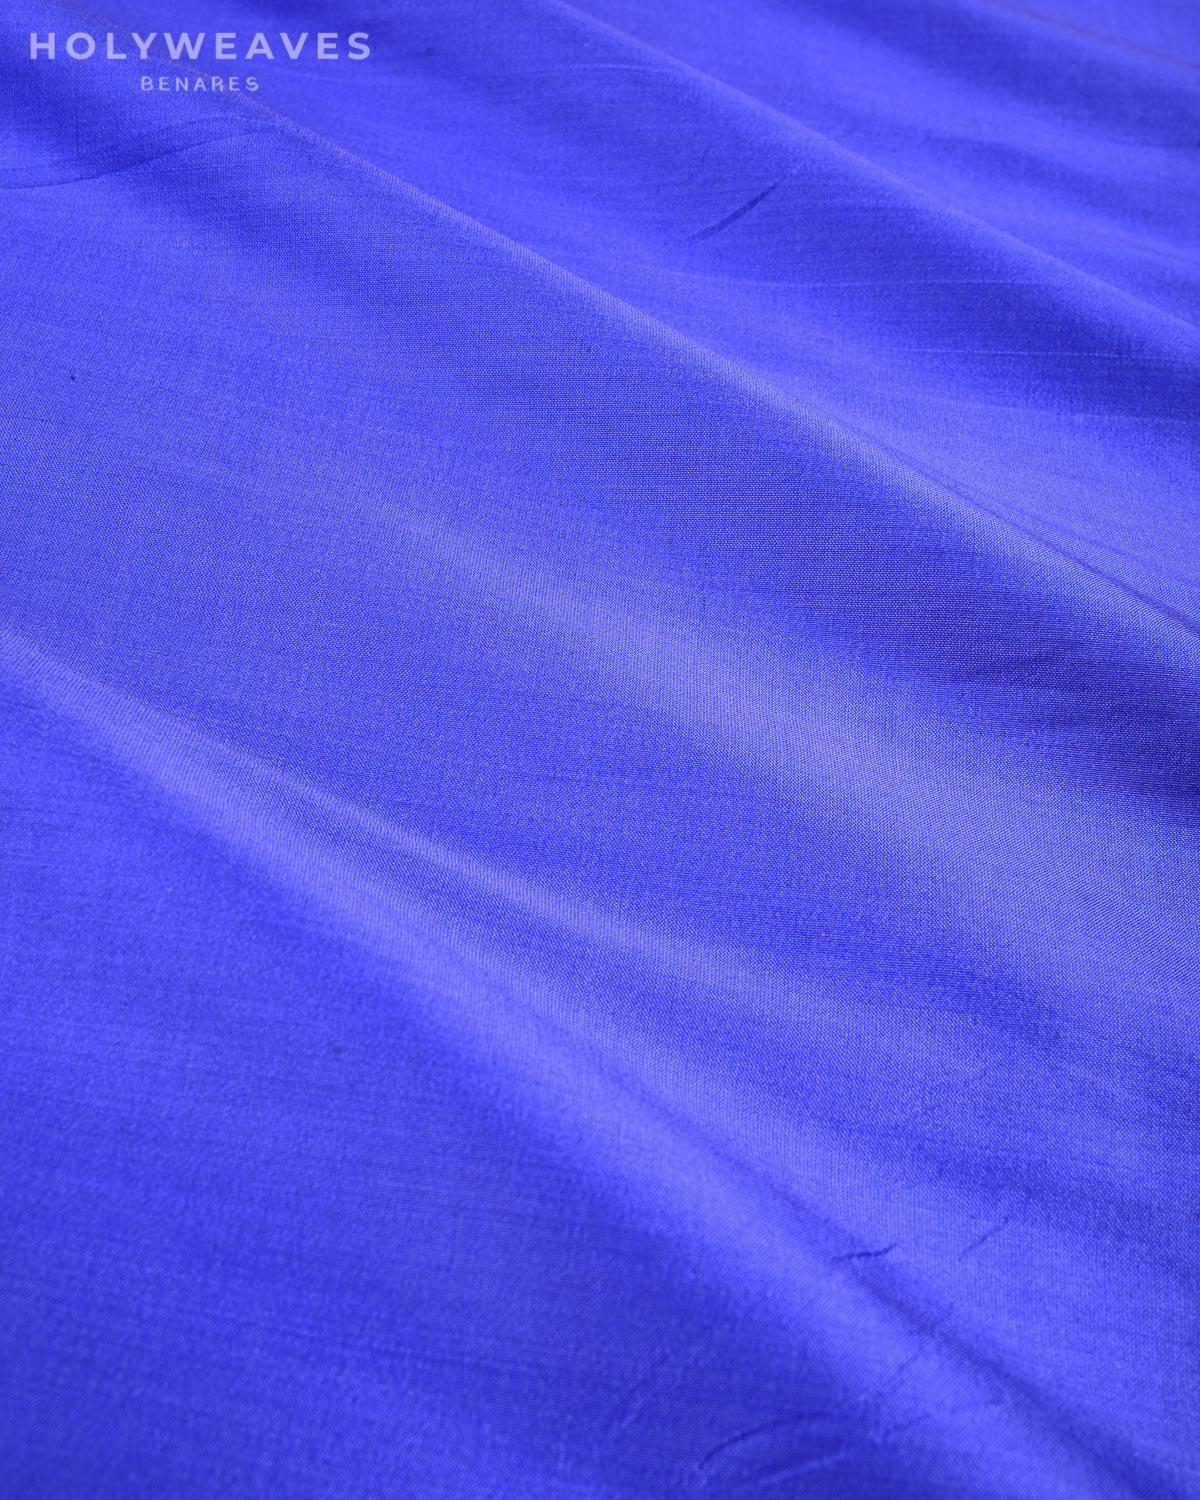 Sapphire Blue Banarasi Plain Woven Spun Silk Fabric - By HolyWeaves, Benares